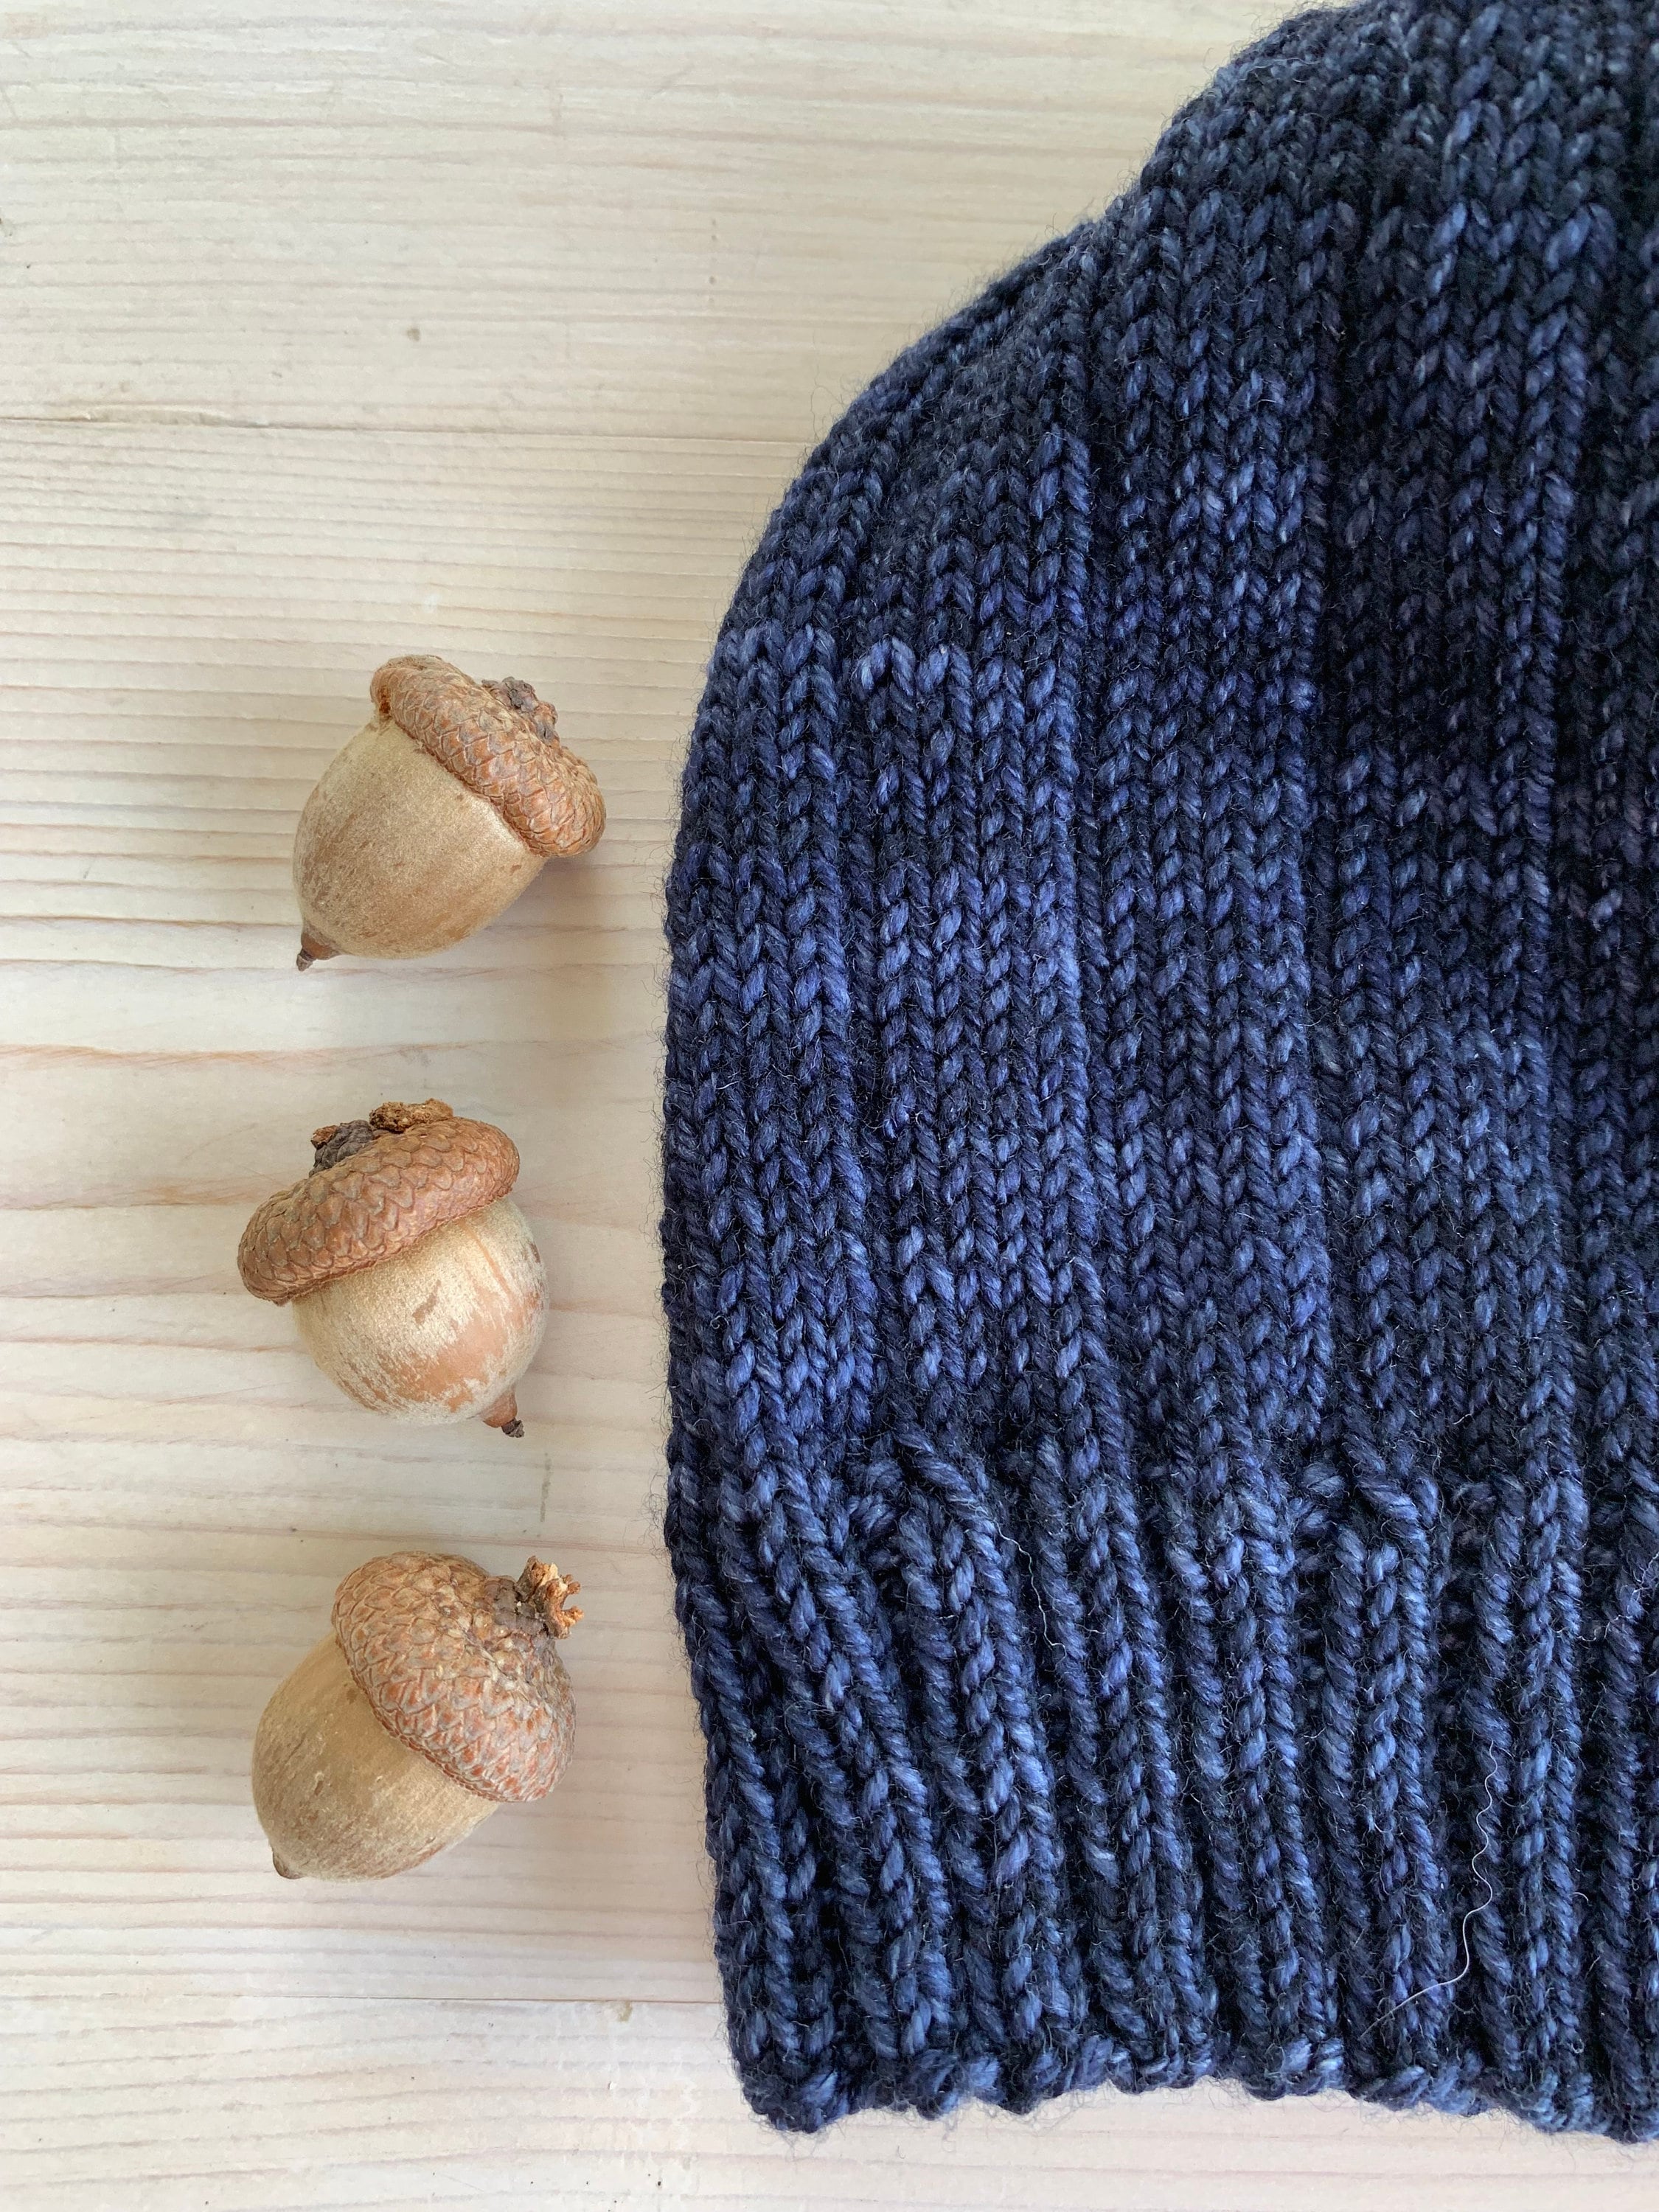 One Row Hat - a loom knit pattern